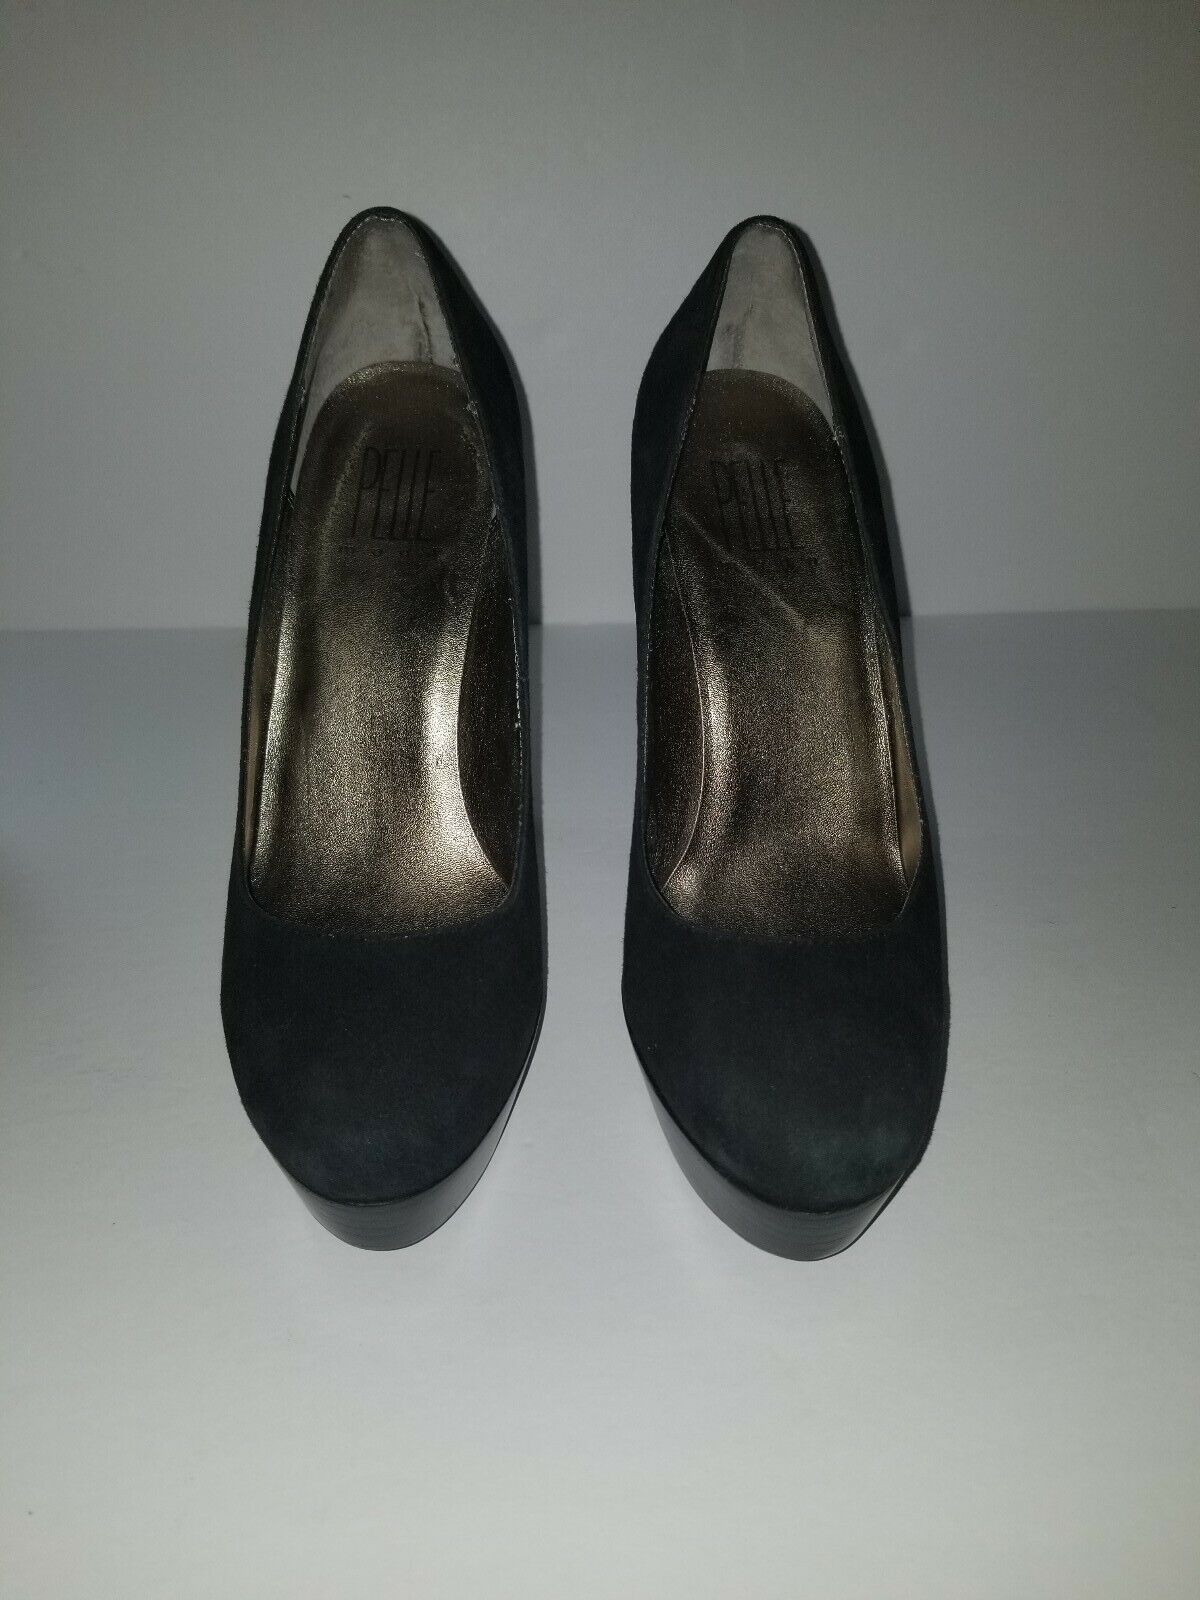 Pelle Moda Black Suede Size 8 Heels Pumps Round T… - image 2